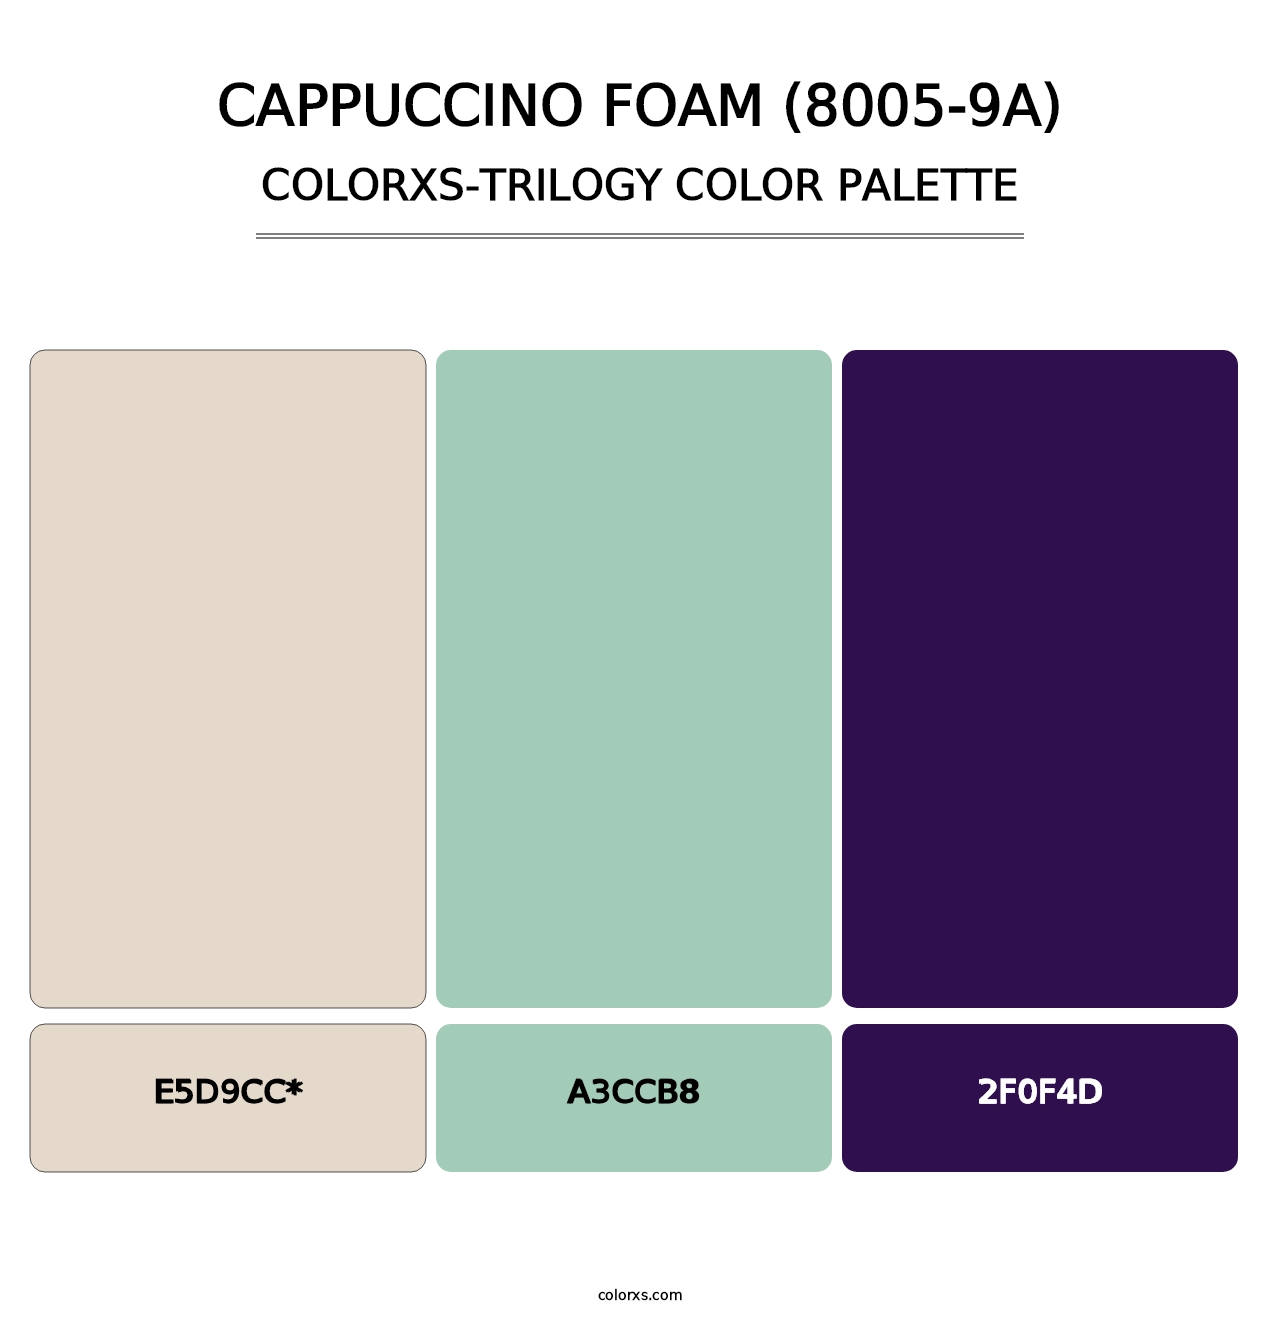 Cappuccino Foam (8005-9A) - Colorxs Trilogy Palette